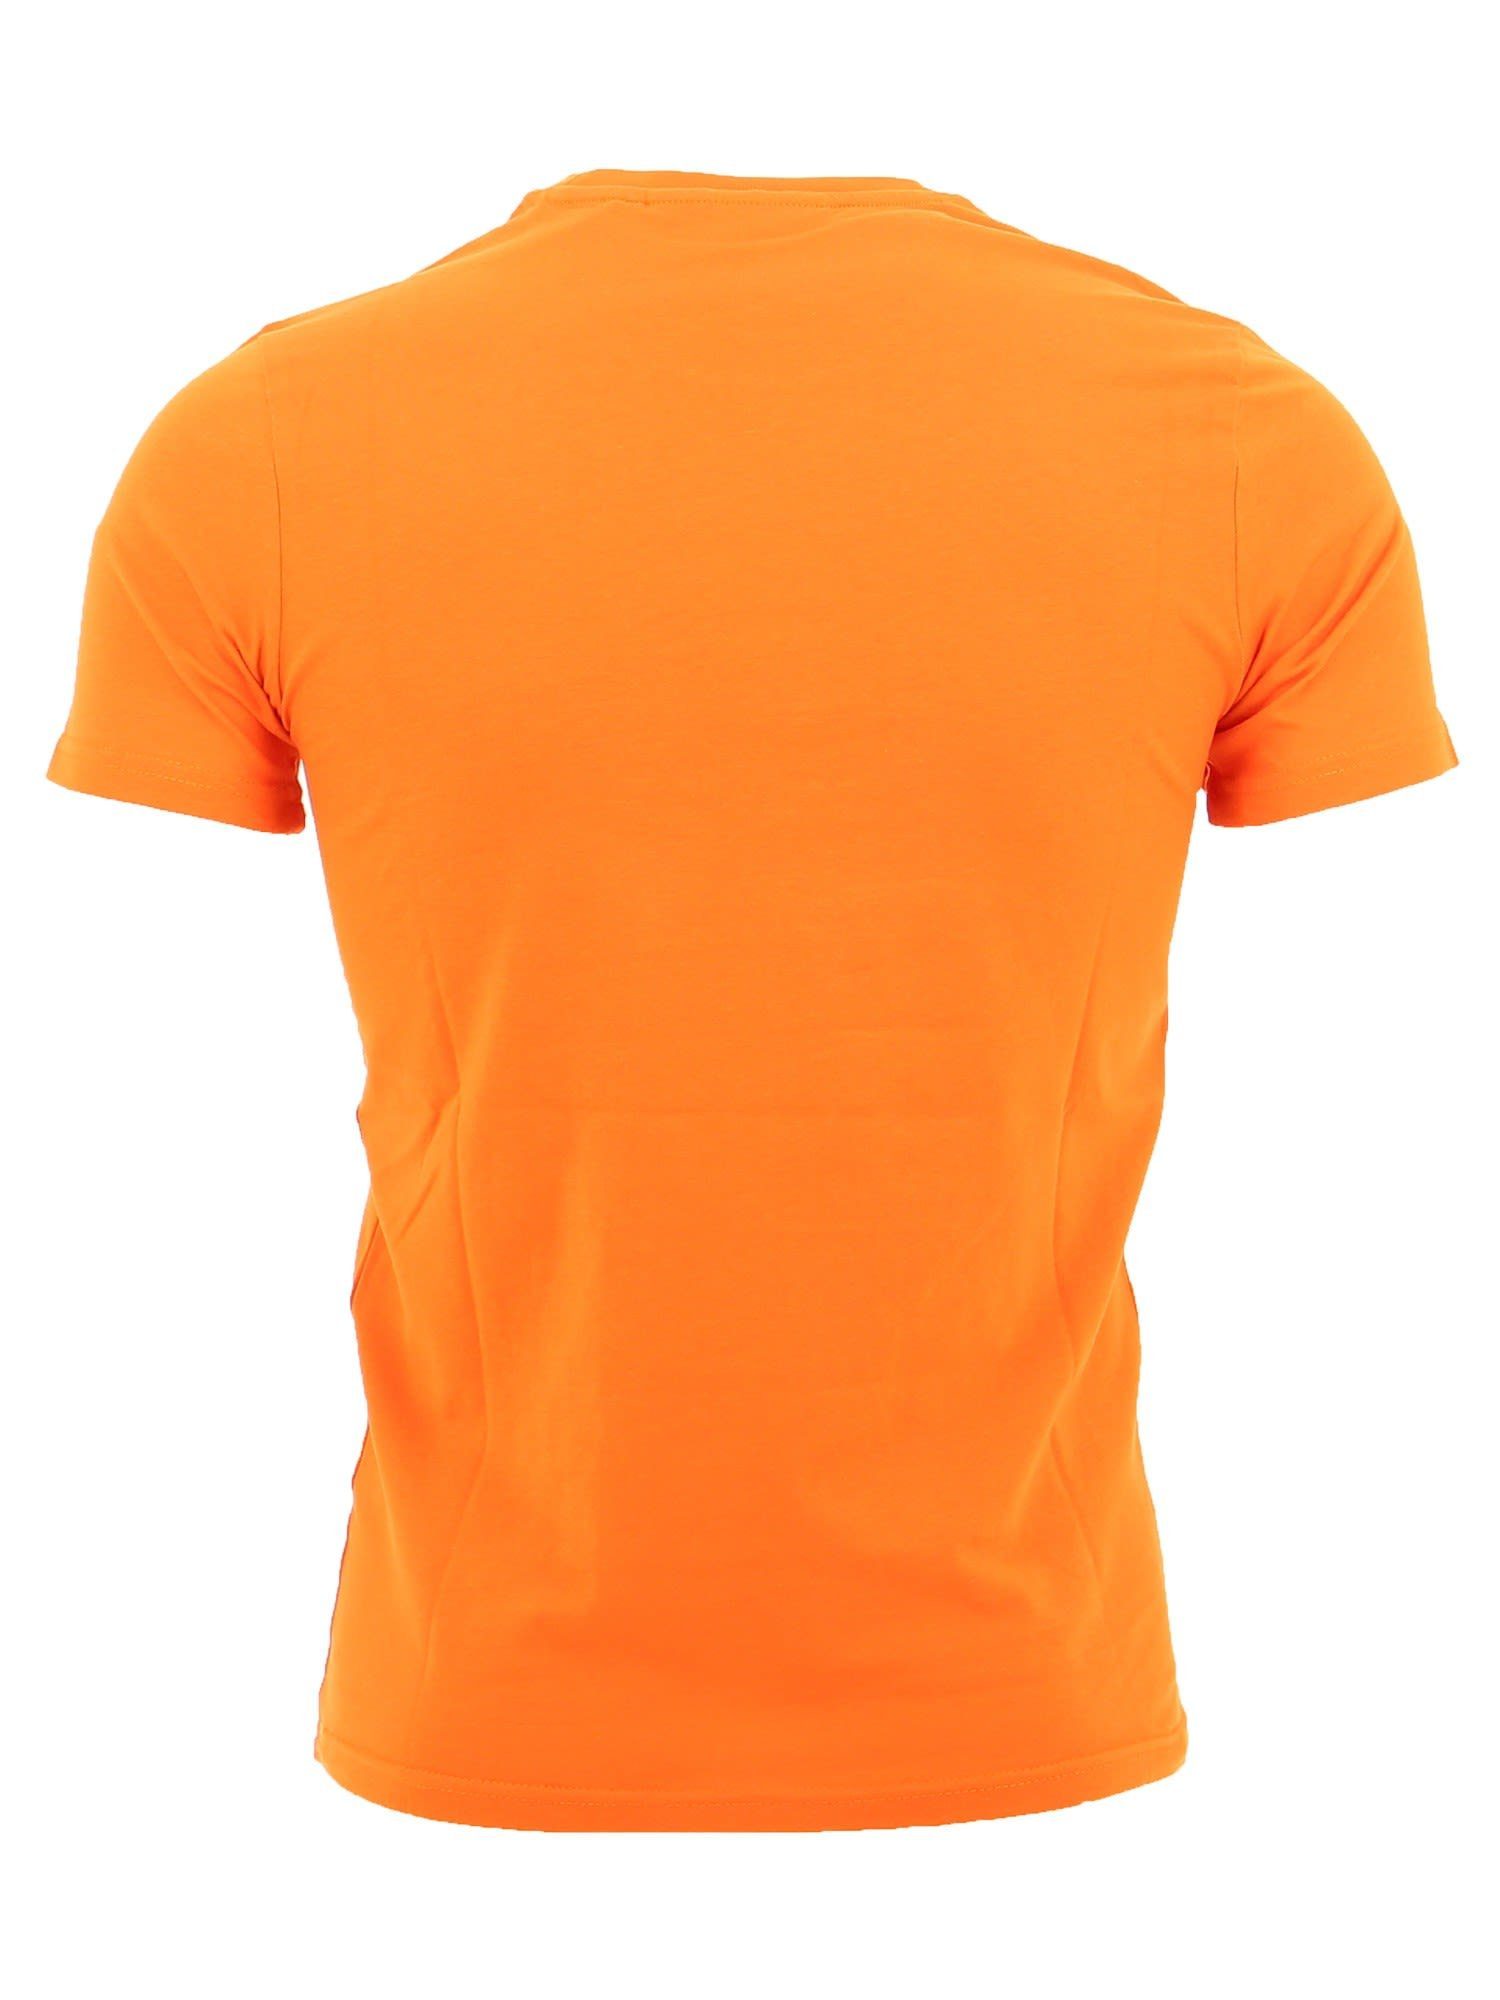 2 Performance M T-Shirt Peak Ground Performance Orange Peak Altitude Herren Tee